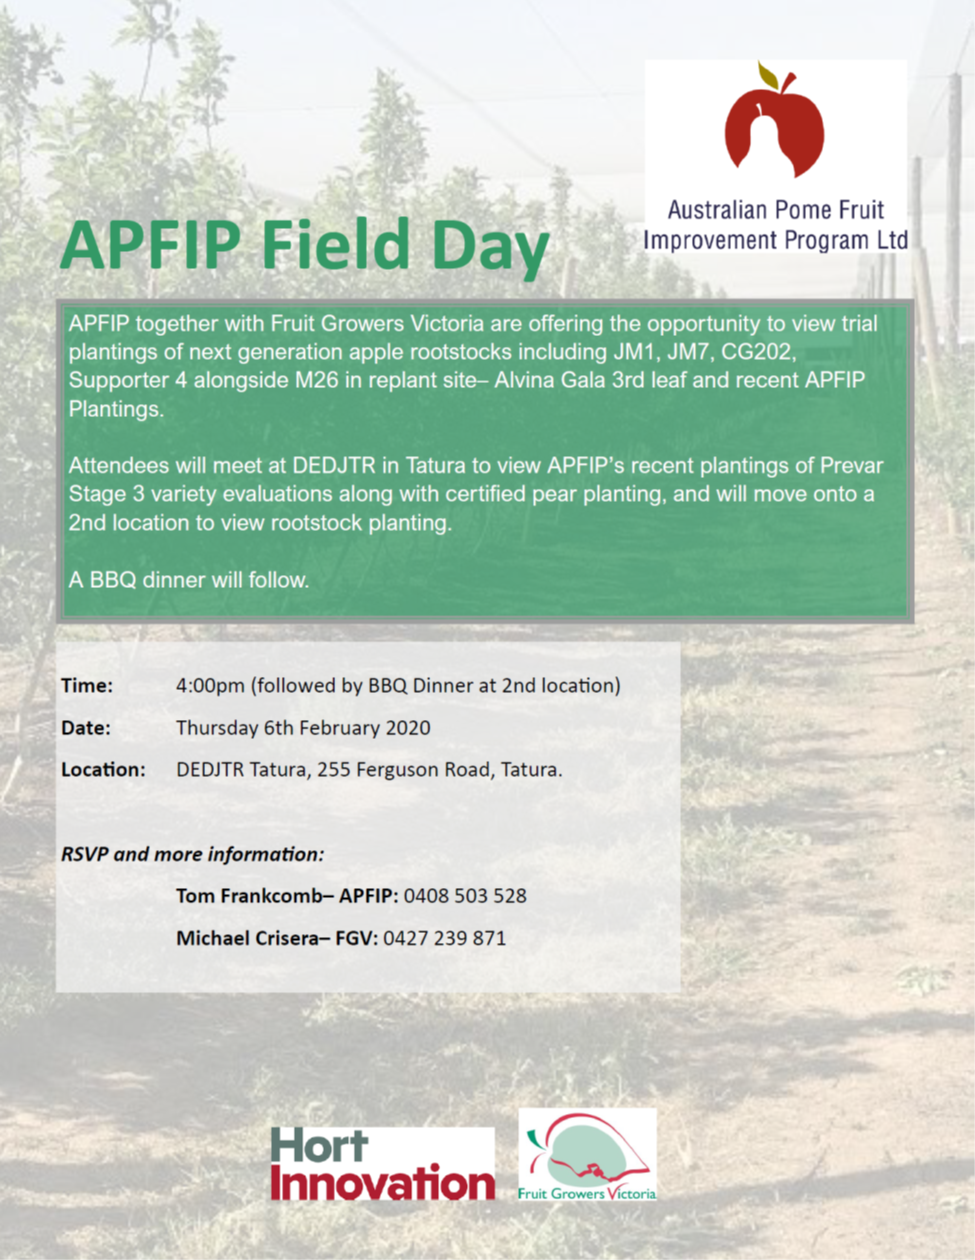 APFIP Field Day- Thursday 6th February 2020